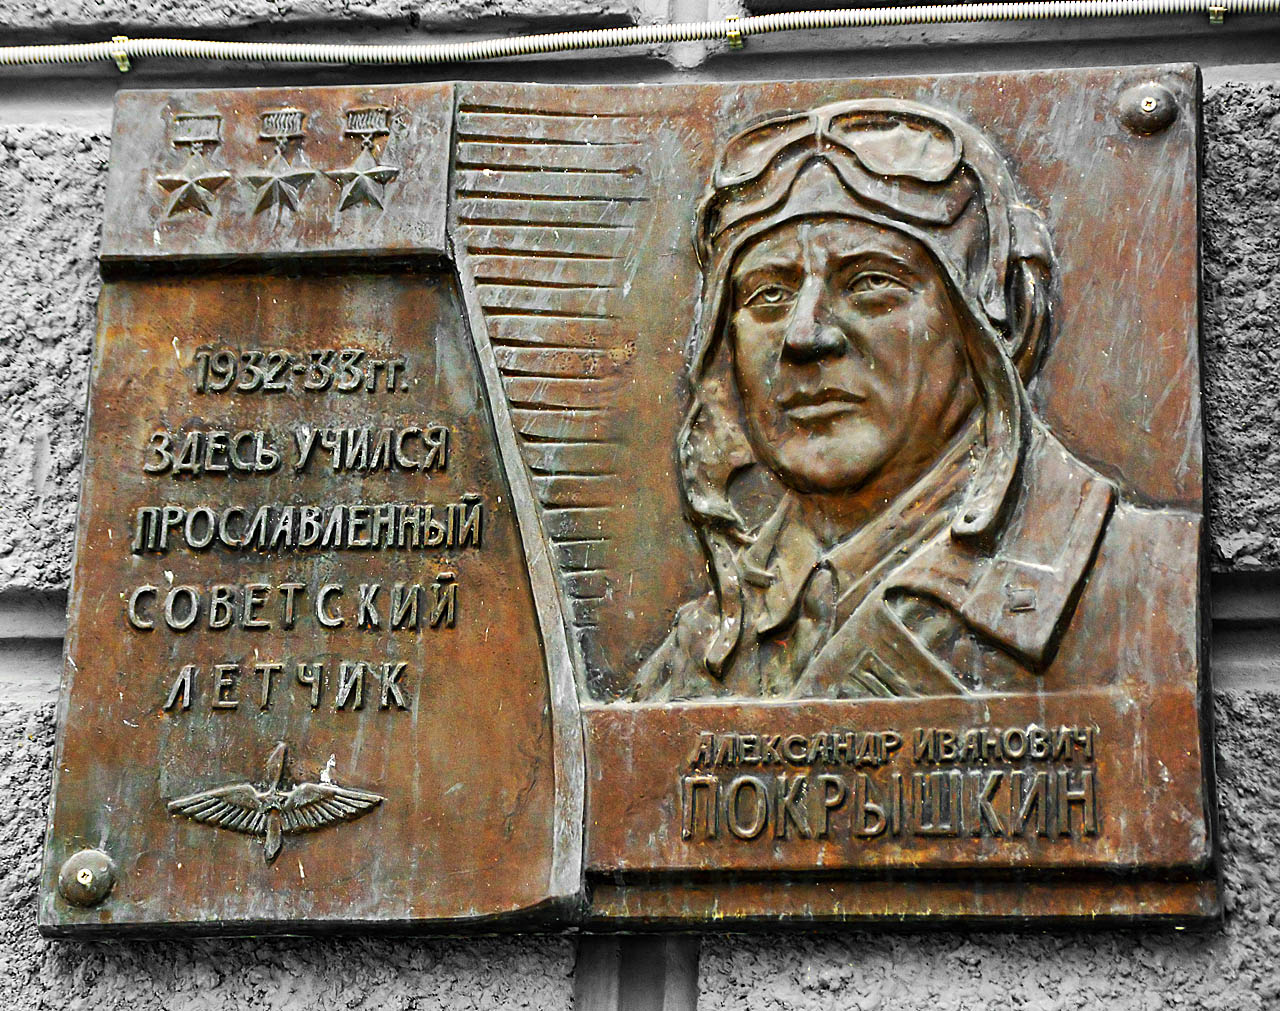 Perm, Комсомольский проспект, 1. Perm — Memorial plaques